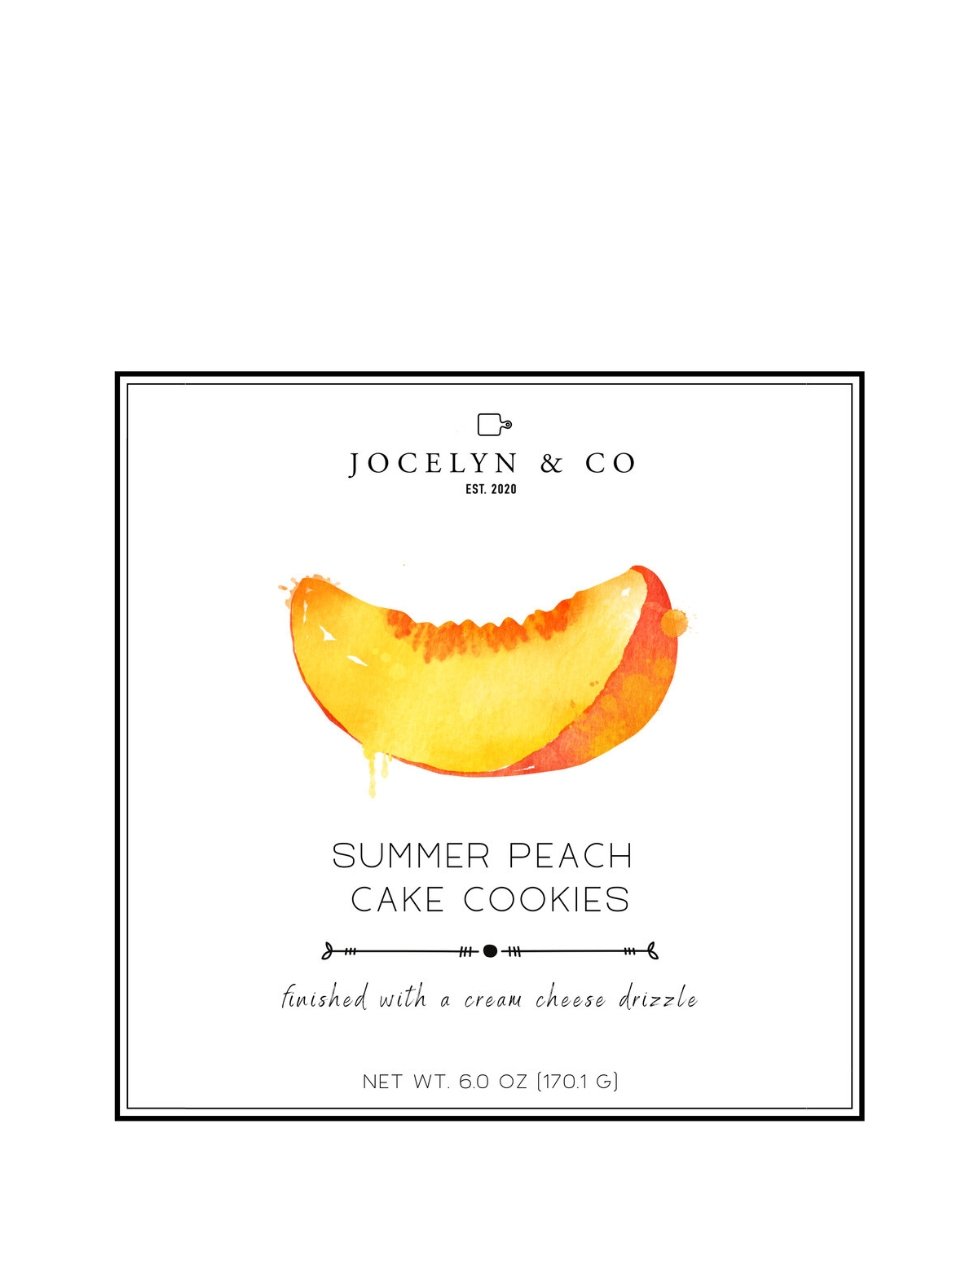 Jocelyn & Co Summer Peach Cake Cookies